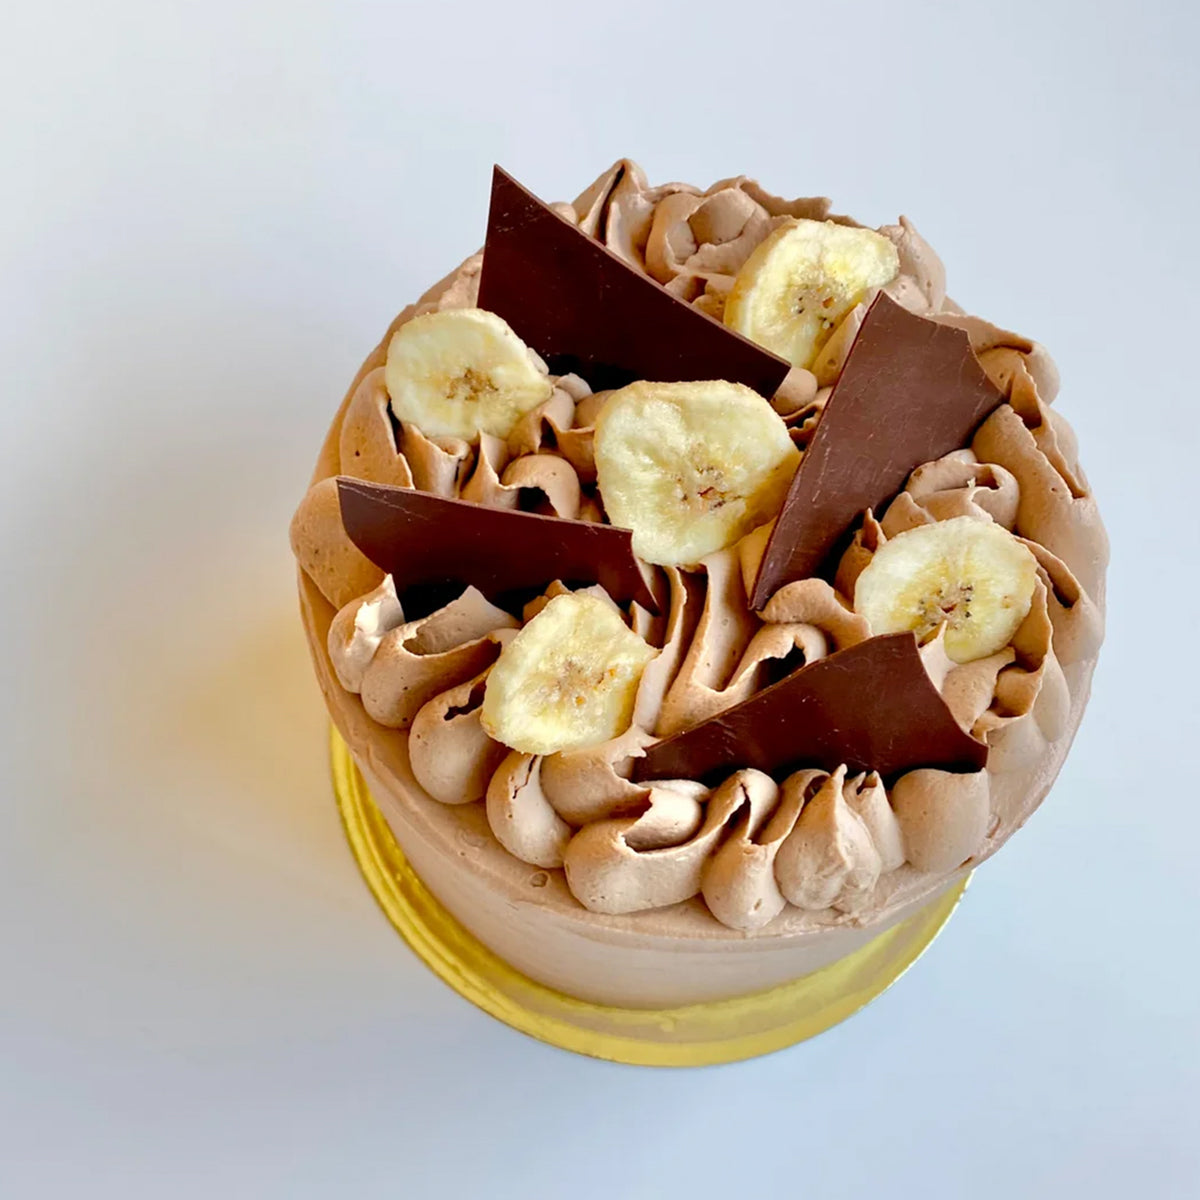 Vegan banana and chocolate mounted cake